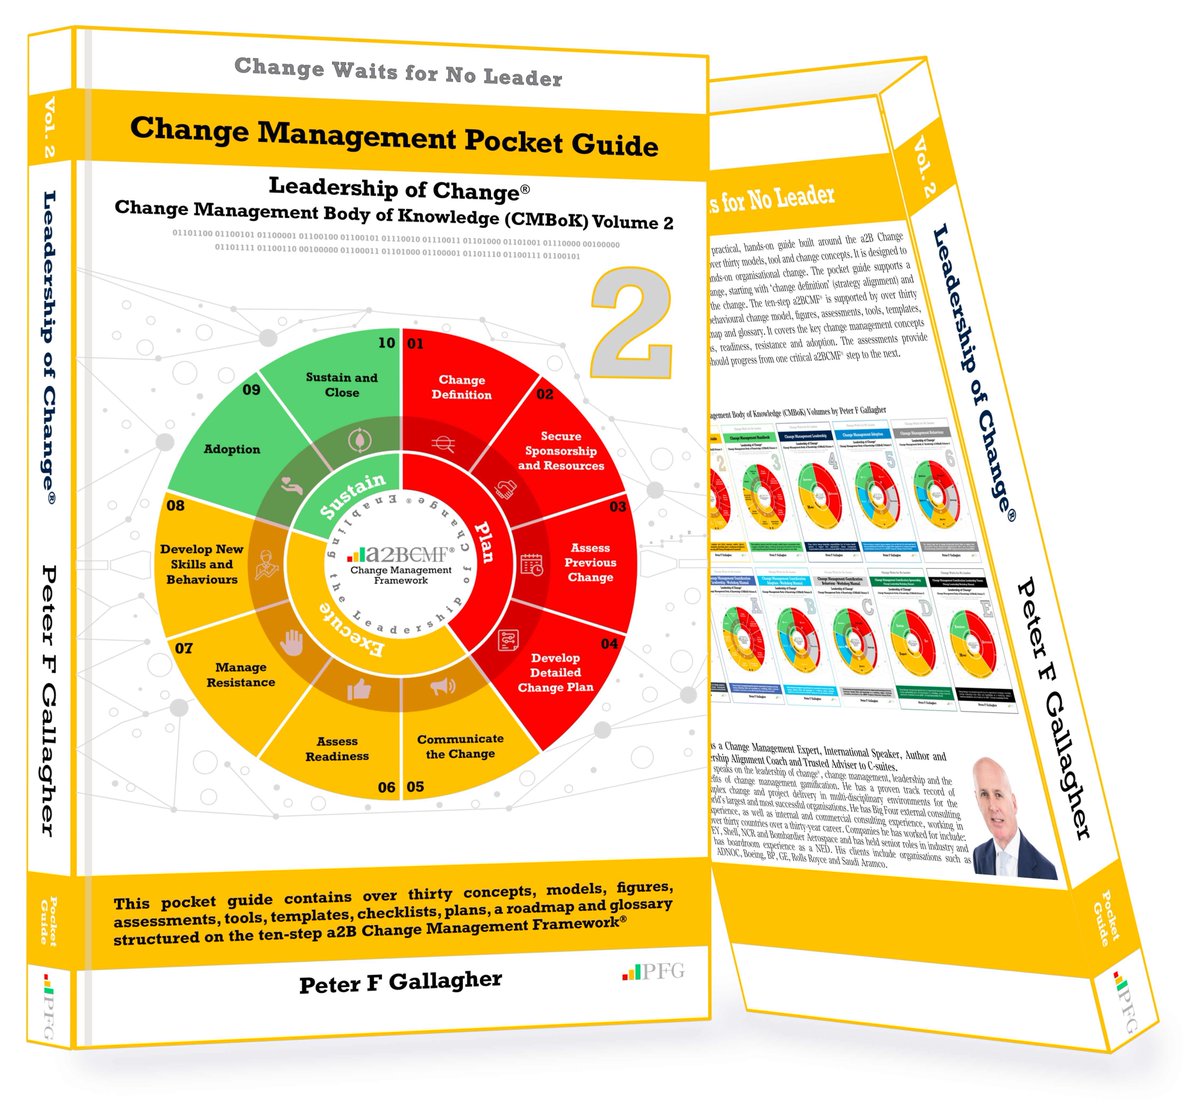 #LeadershipOfChange
Change Management Pocket Guide - Leadership of Change
Change Management Body of Knowledge (CMBoK) Volume 2
Includes 30+ concepts, models, figures, assessments, tools, templates, checklists, plans, glossary, etc
#ChangeManagement
bit.ly/2LypqGp